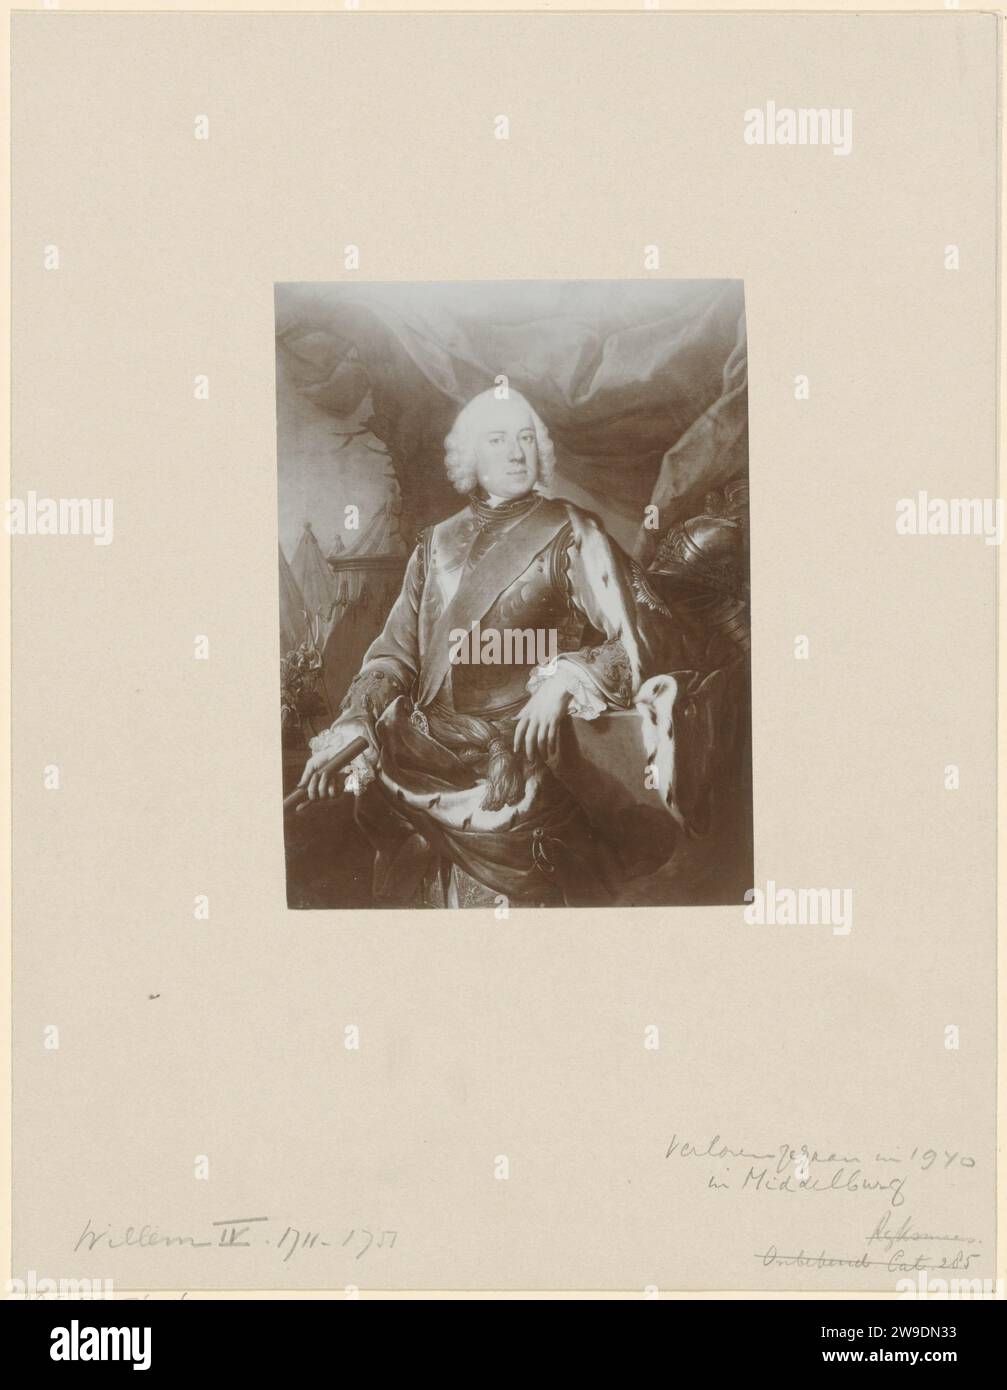 Portrait of William IV, Prince of Oranje -Nassau, 1850 - 1930 photograph  Netherlands photographic support Stock Photo